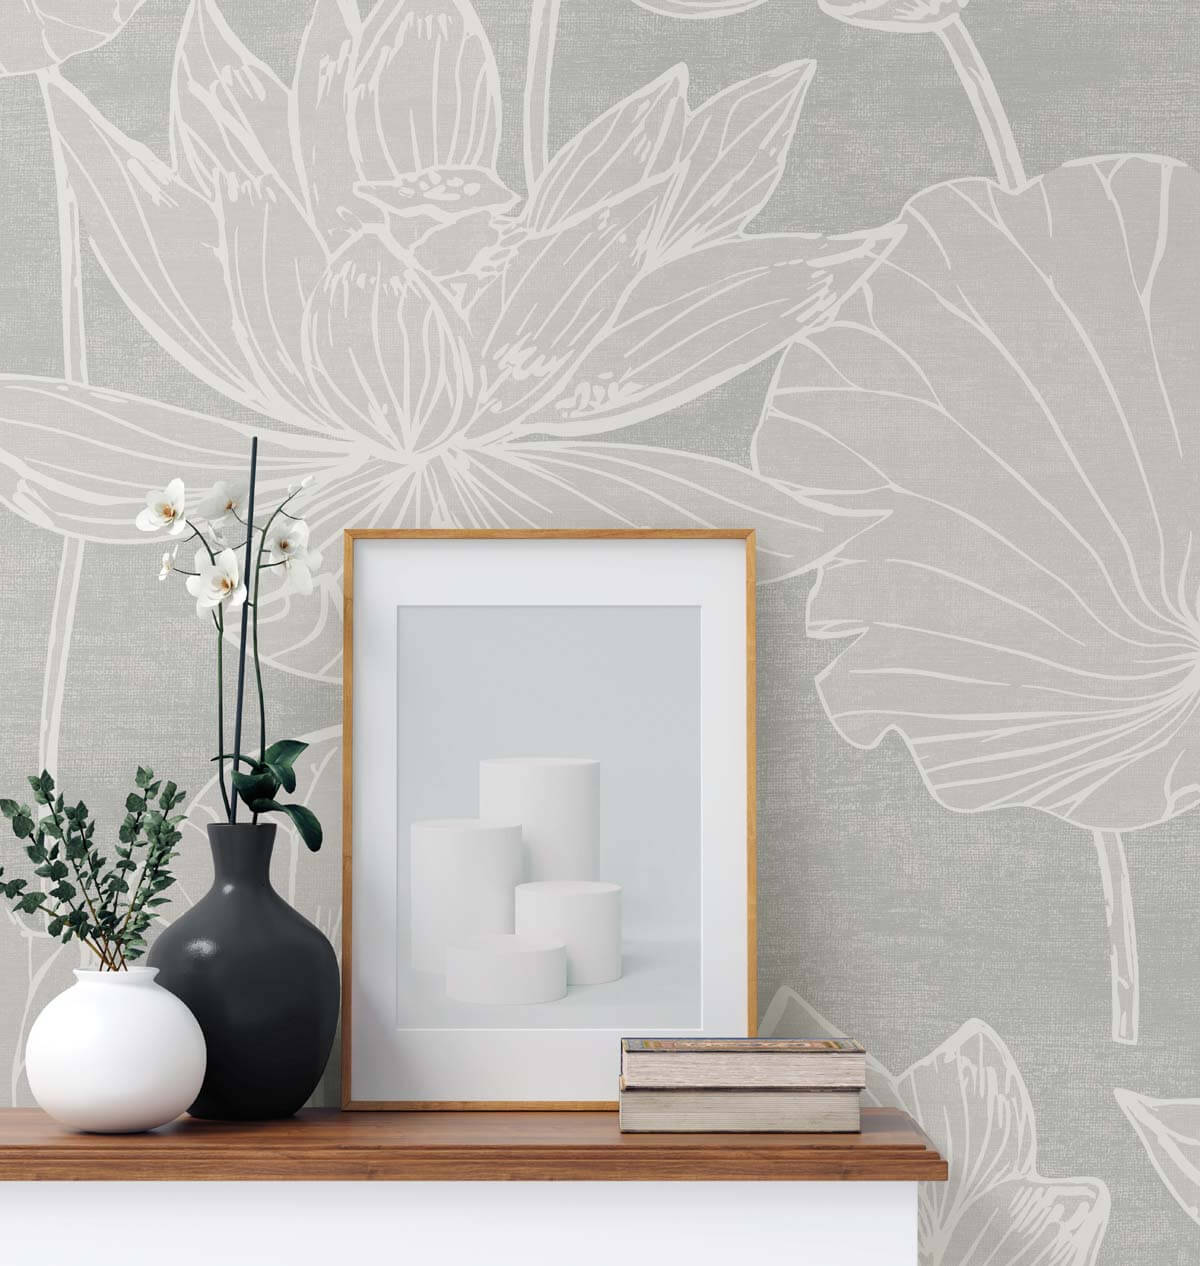 White Heron Water Lilies Wallpaper - Shadow